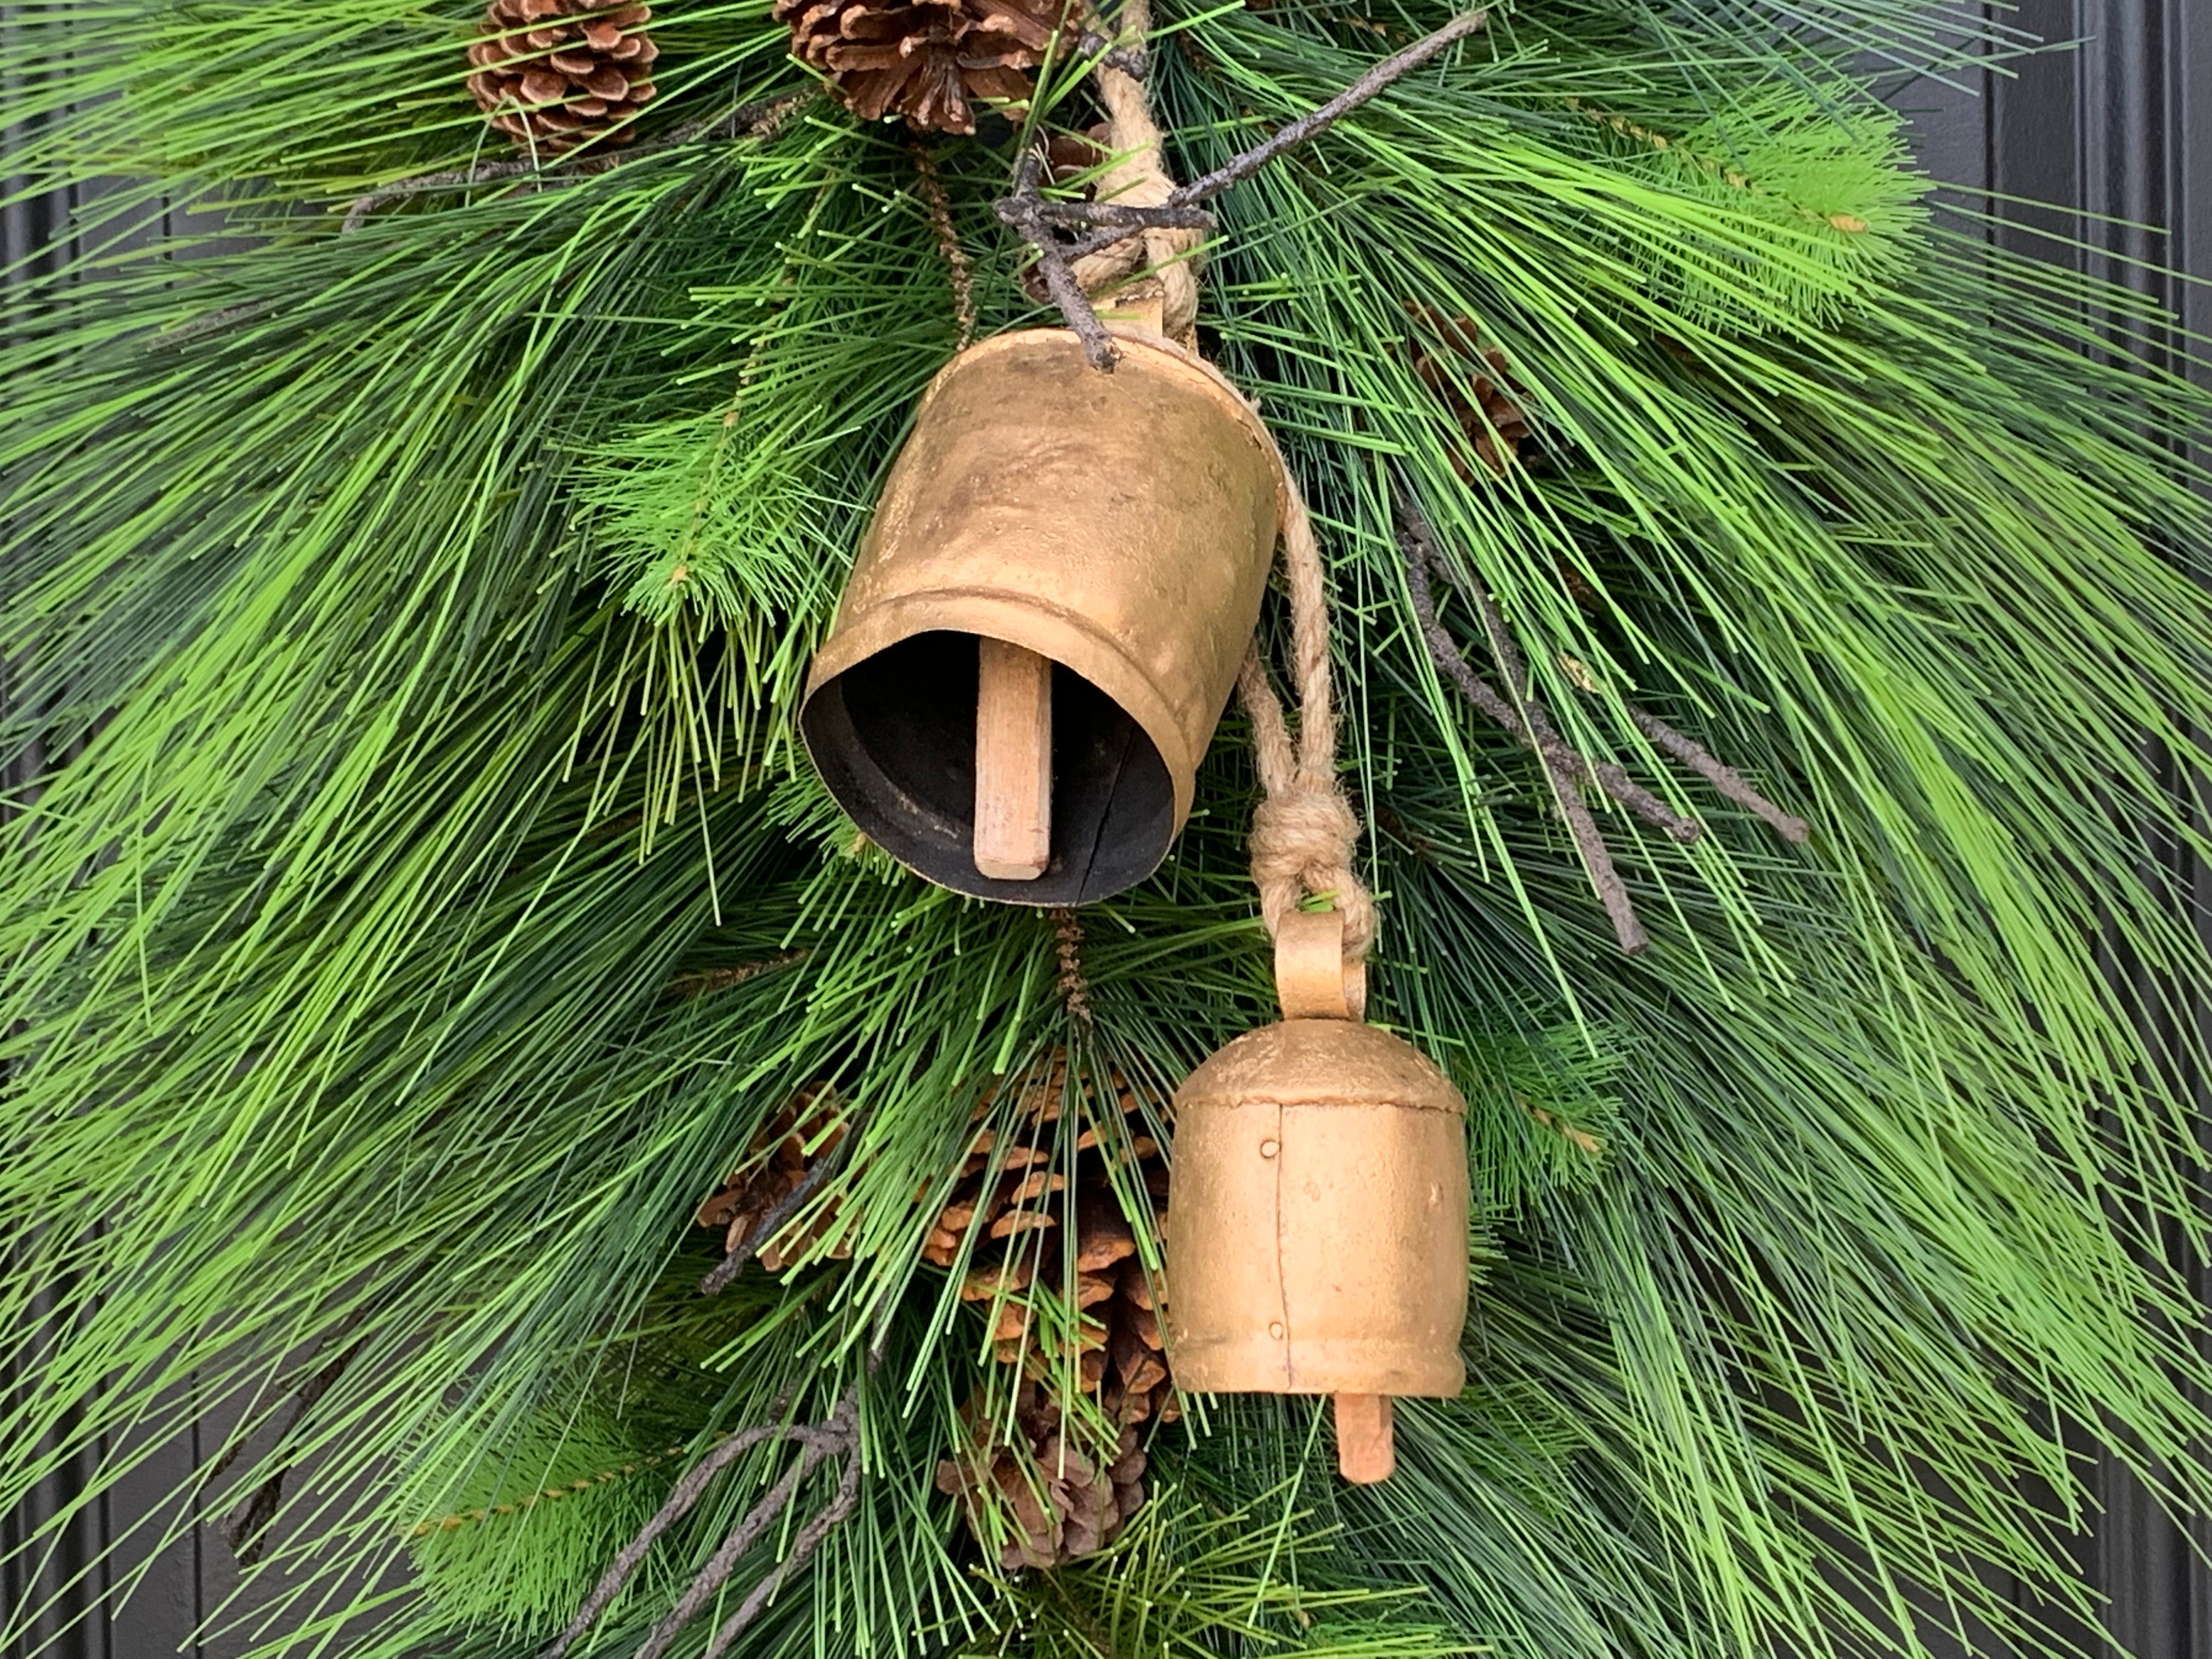 Christmas Pine Teardrop Wreath with Decorative Bells - TwoInspireYou